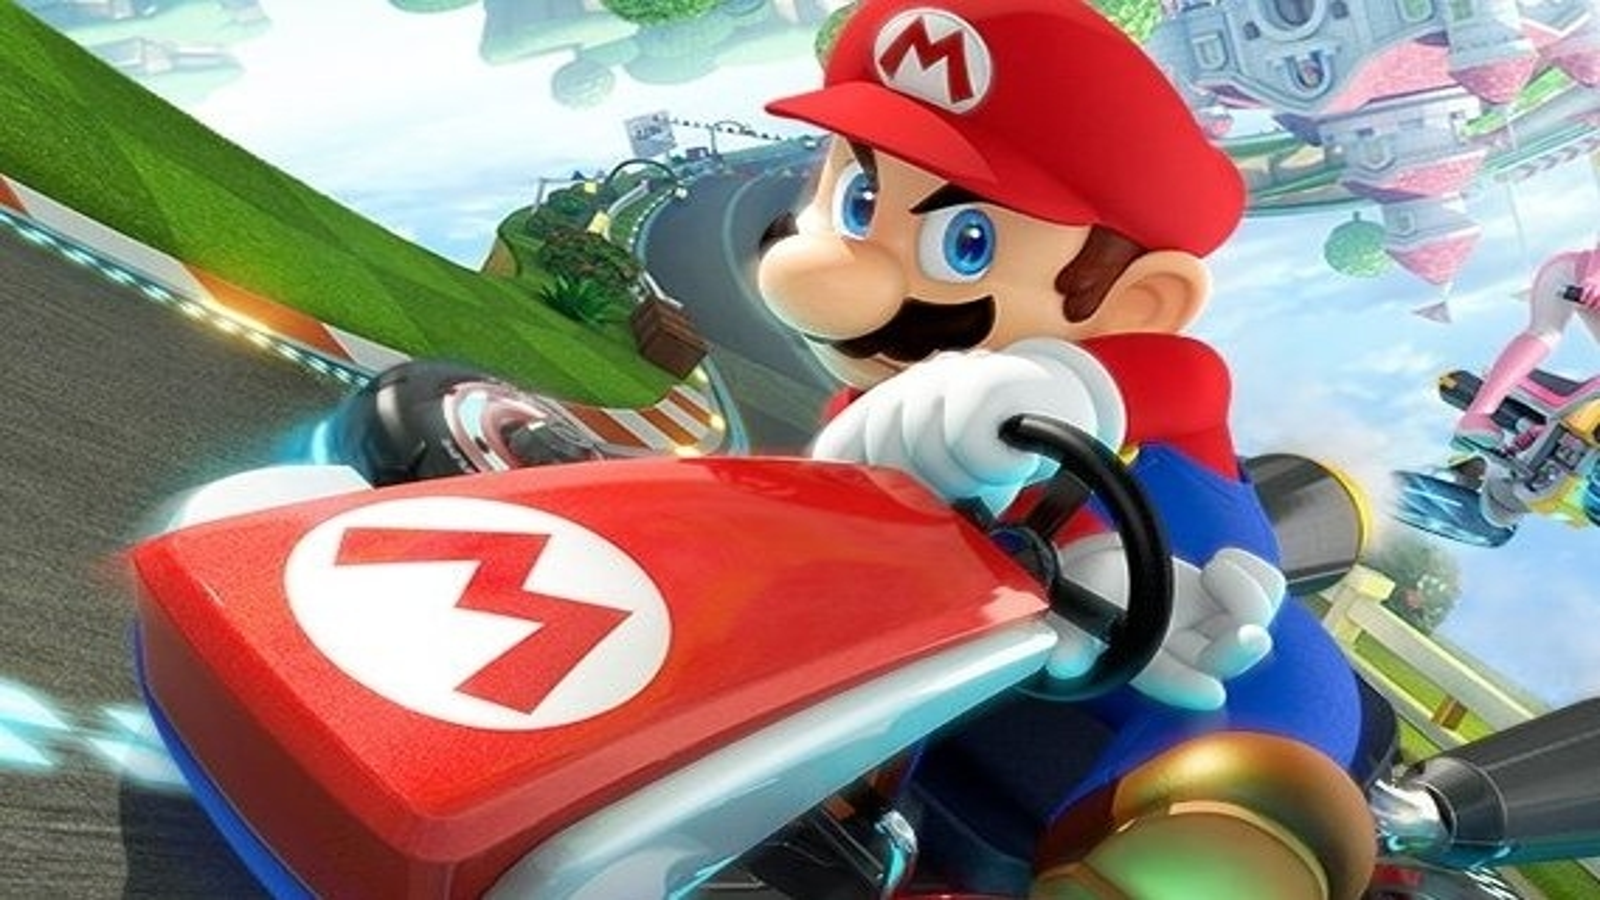 Mario Kart 8 Deluxe + Super Mario Party Double Pack - Nintendo